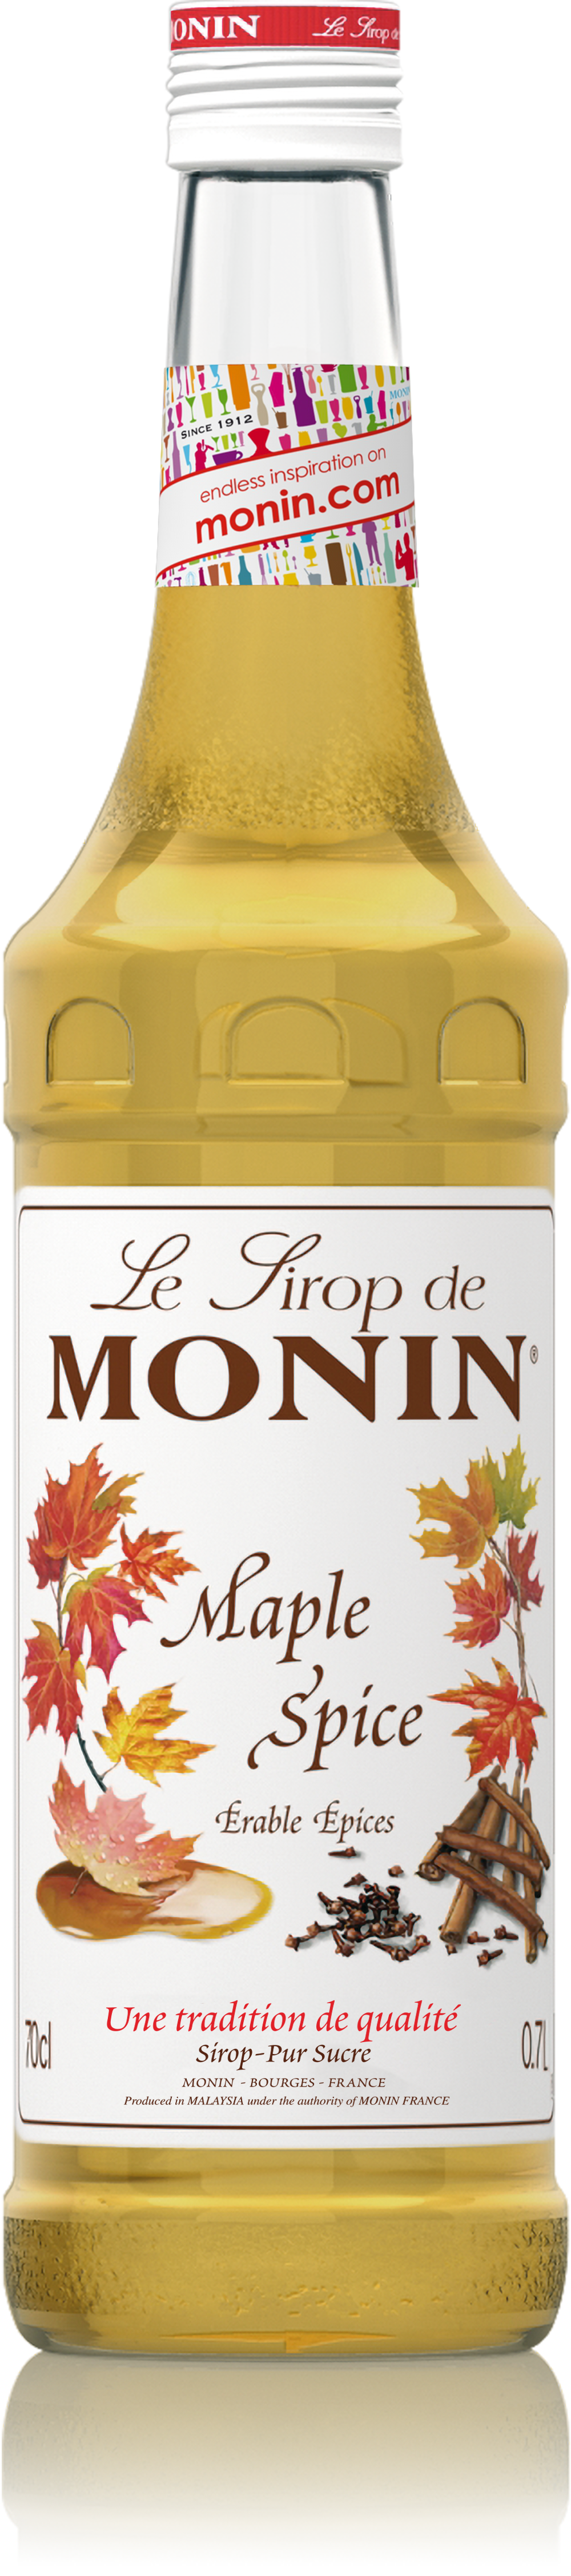 Le Sirop de MONIN Maple Spice